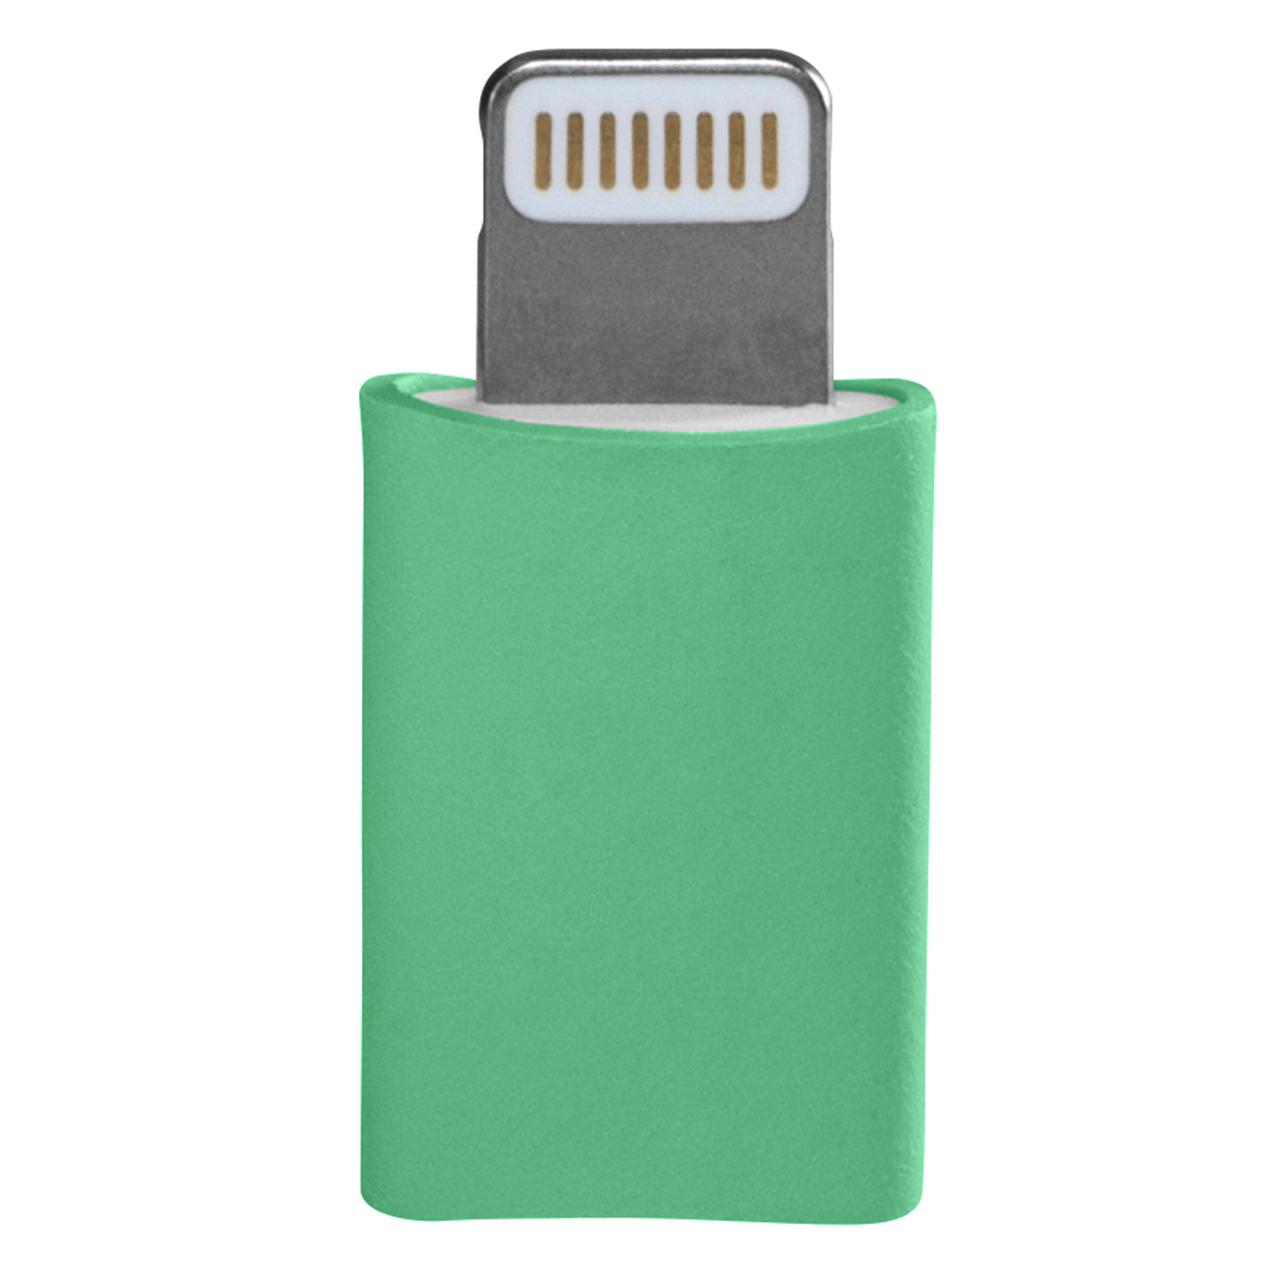 iPhone Adapter Lightning zu Micro USB grün